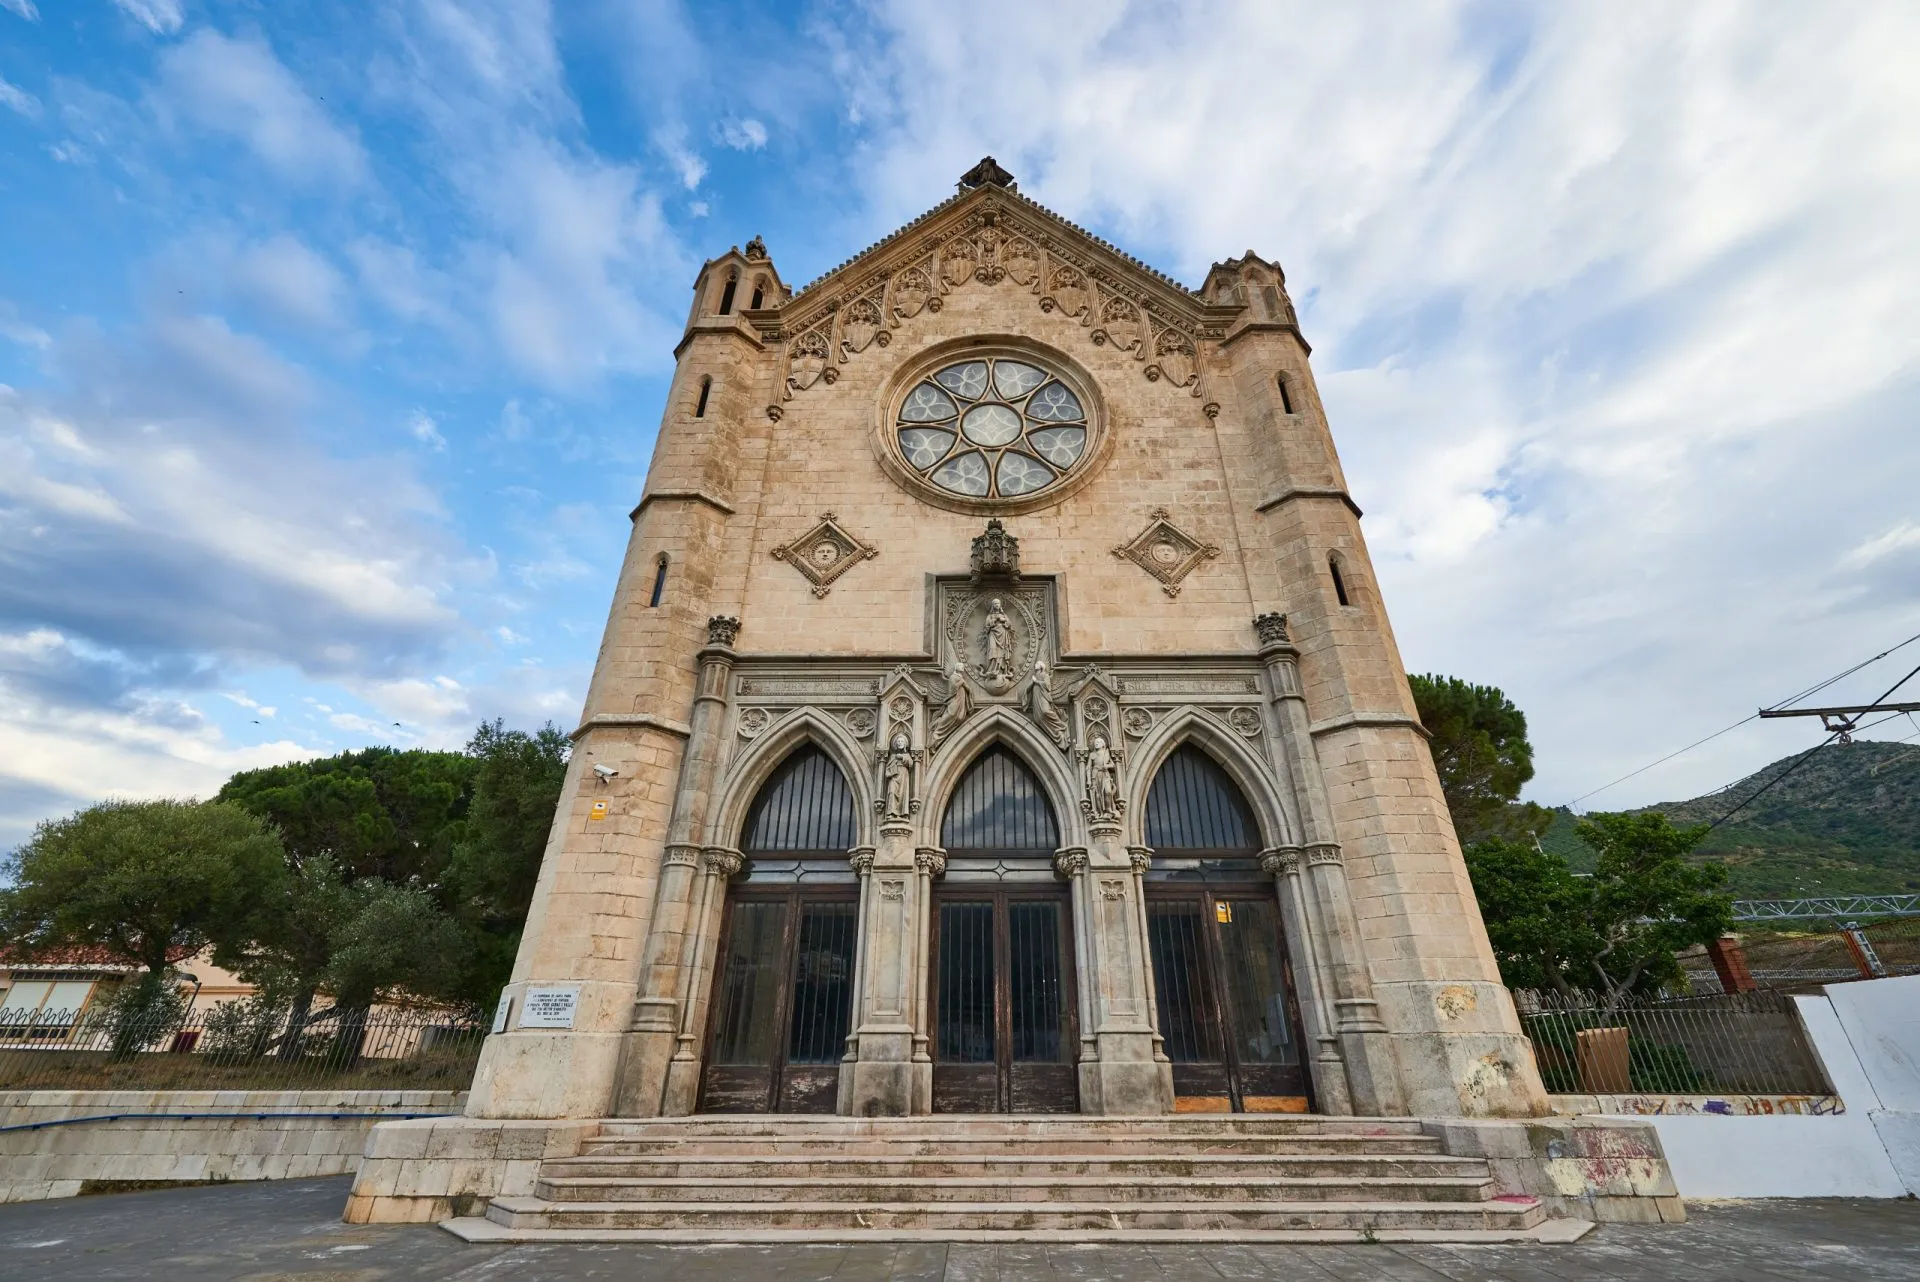 Veduta della chiesa neogotica di Santa Maria di Joan Martorell i Monells, Portbou